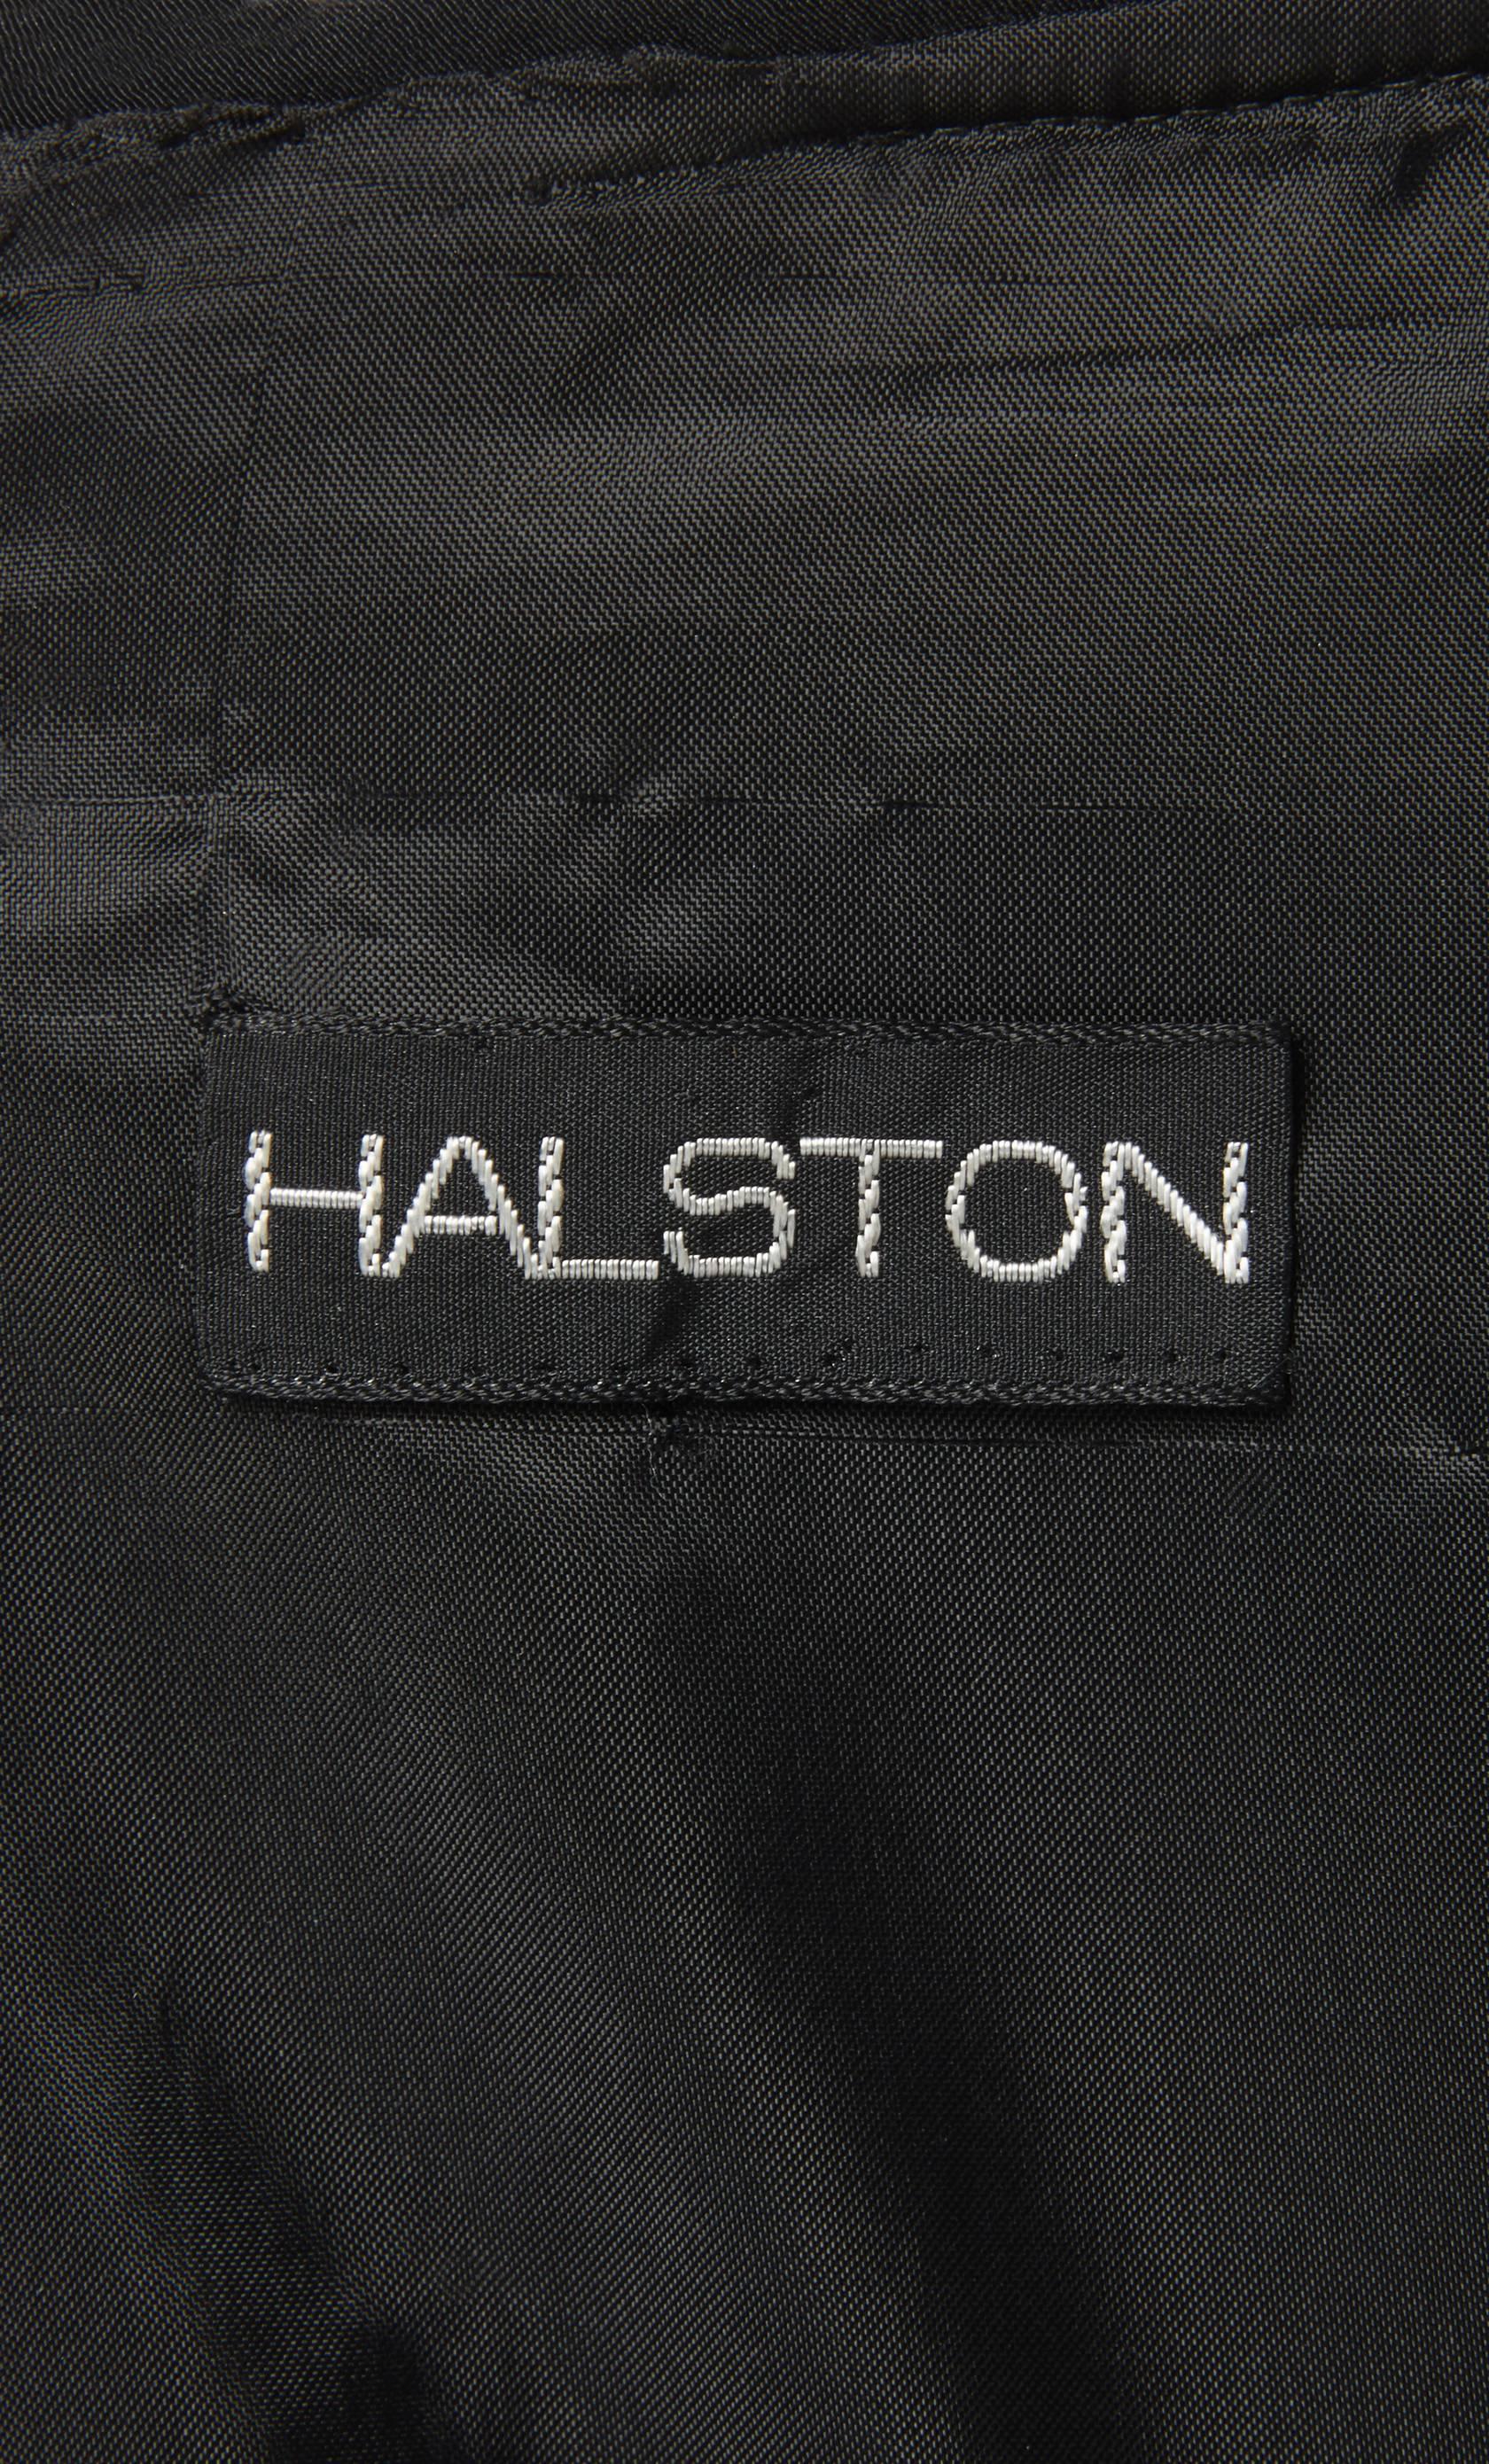 Women's or Men's Halston black dress, circa 1975 For Sale